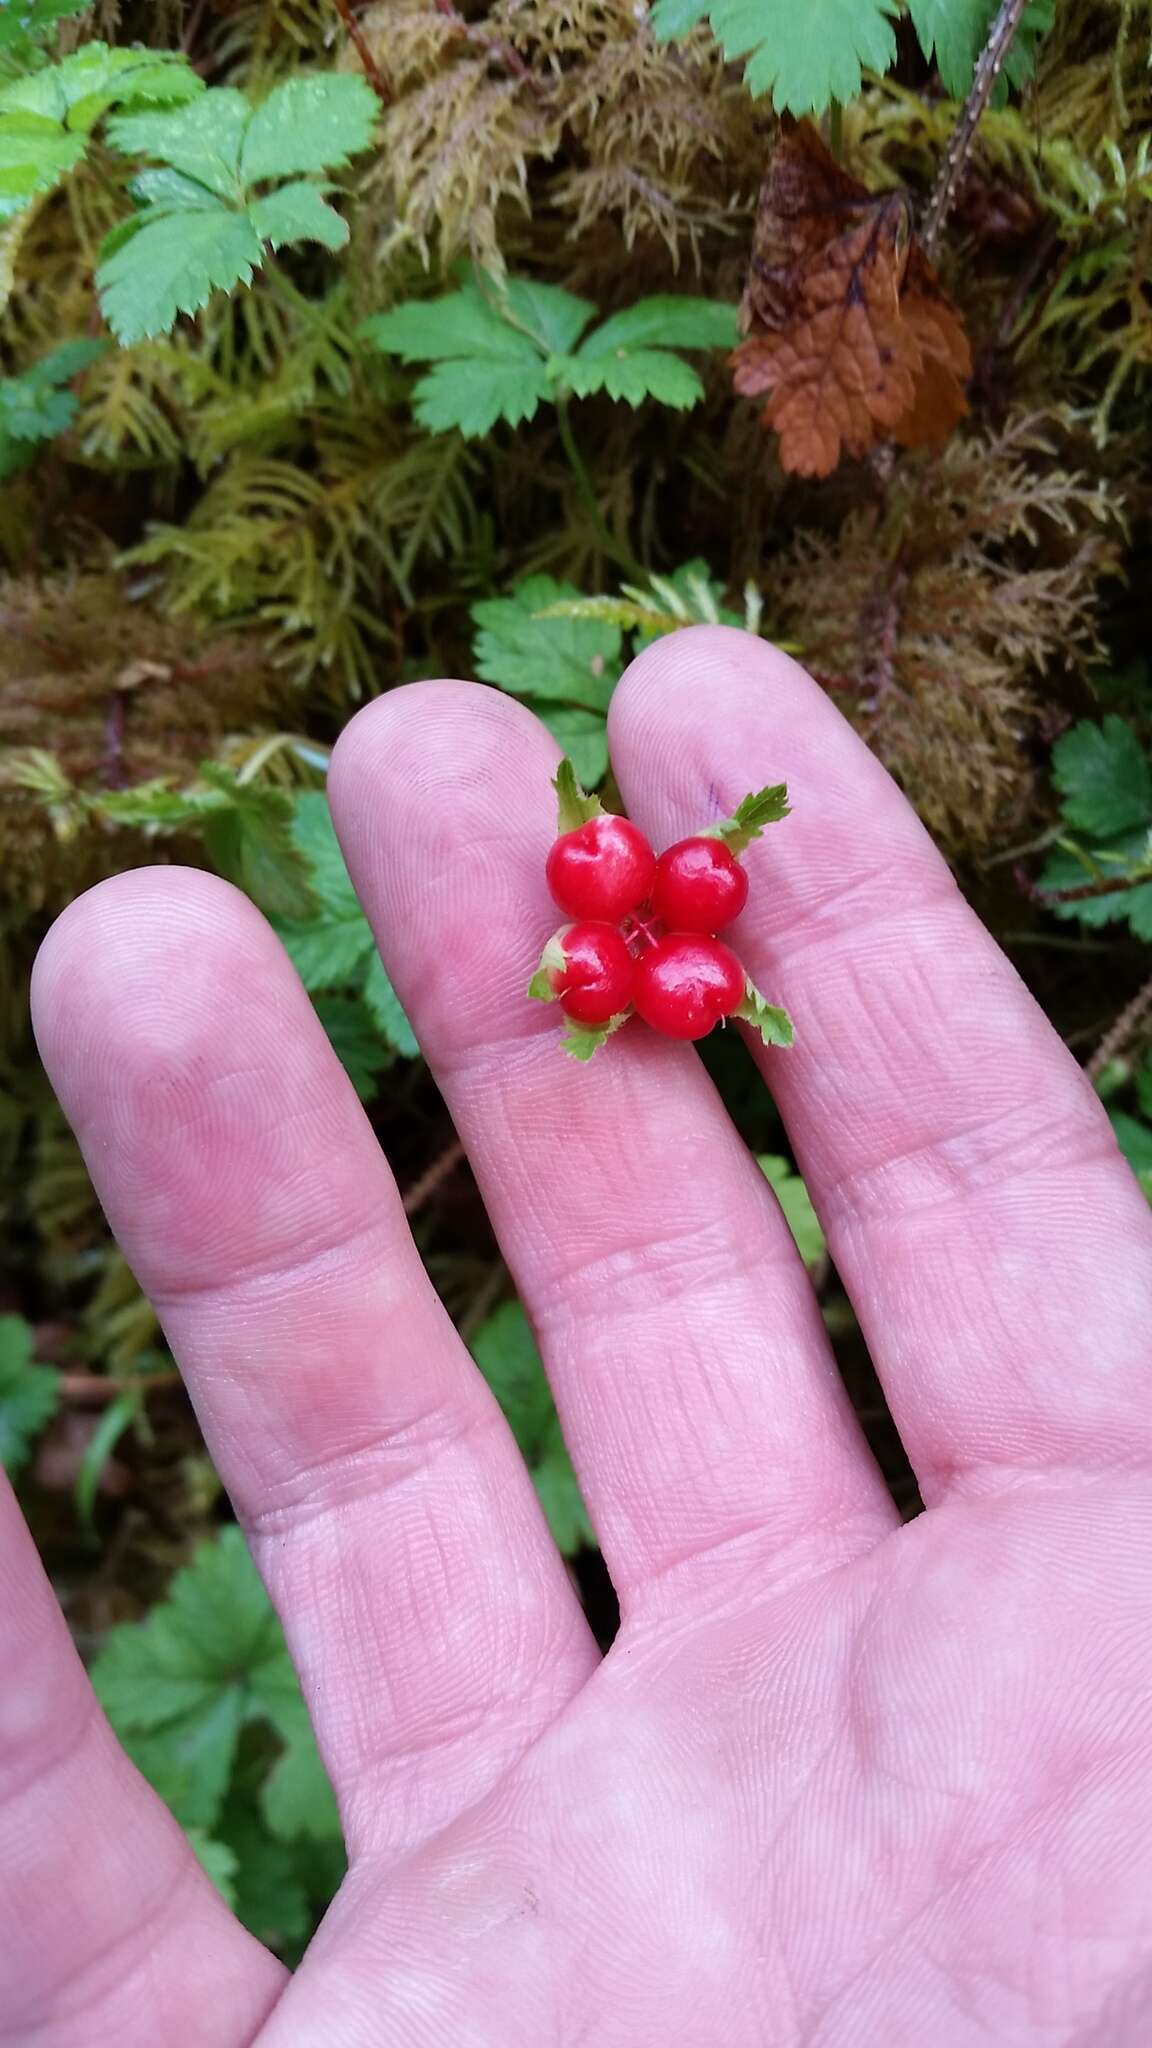 Image of strawberryleaf raspberry